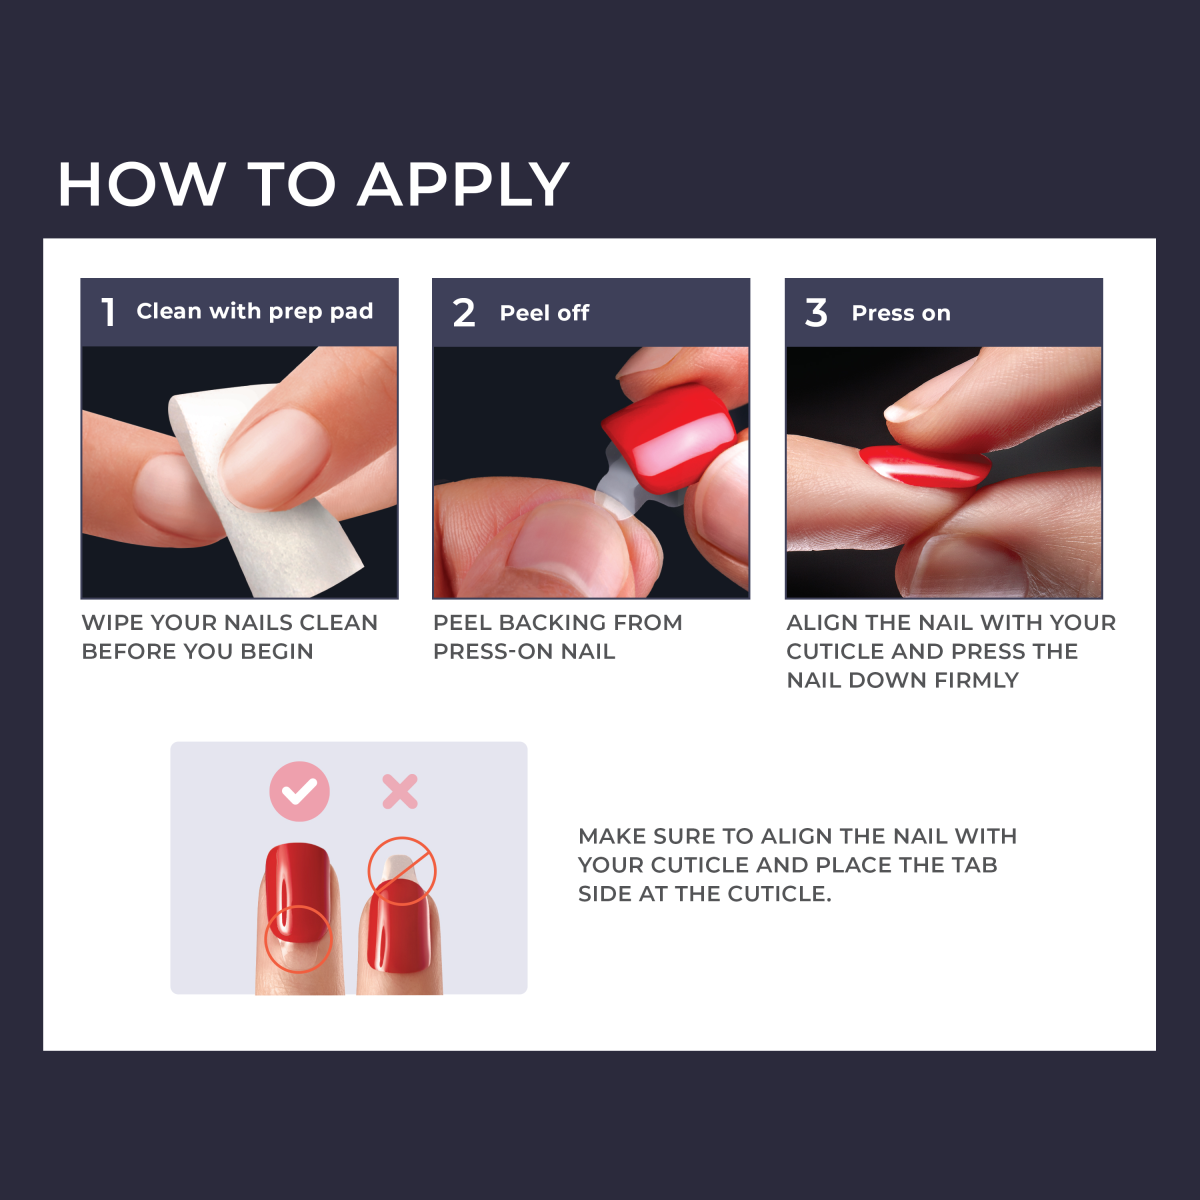 imPRESS Press-On Manicure - Adore You